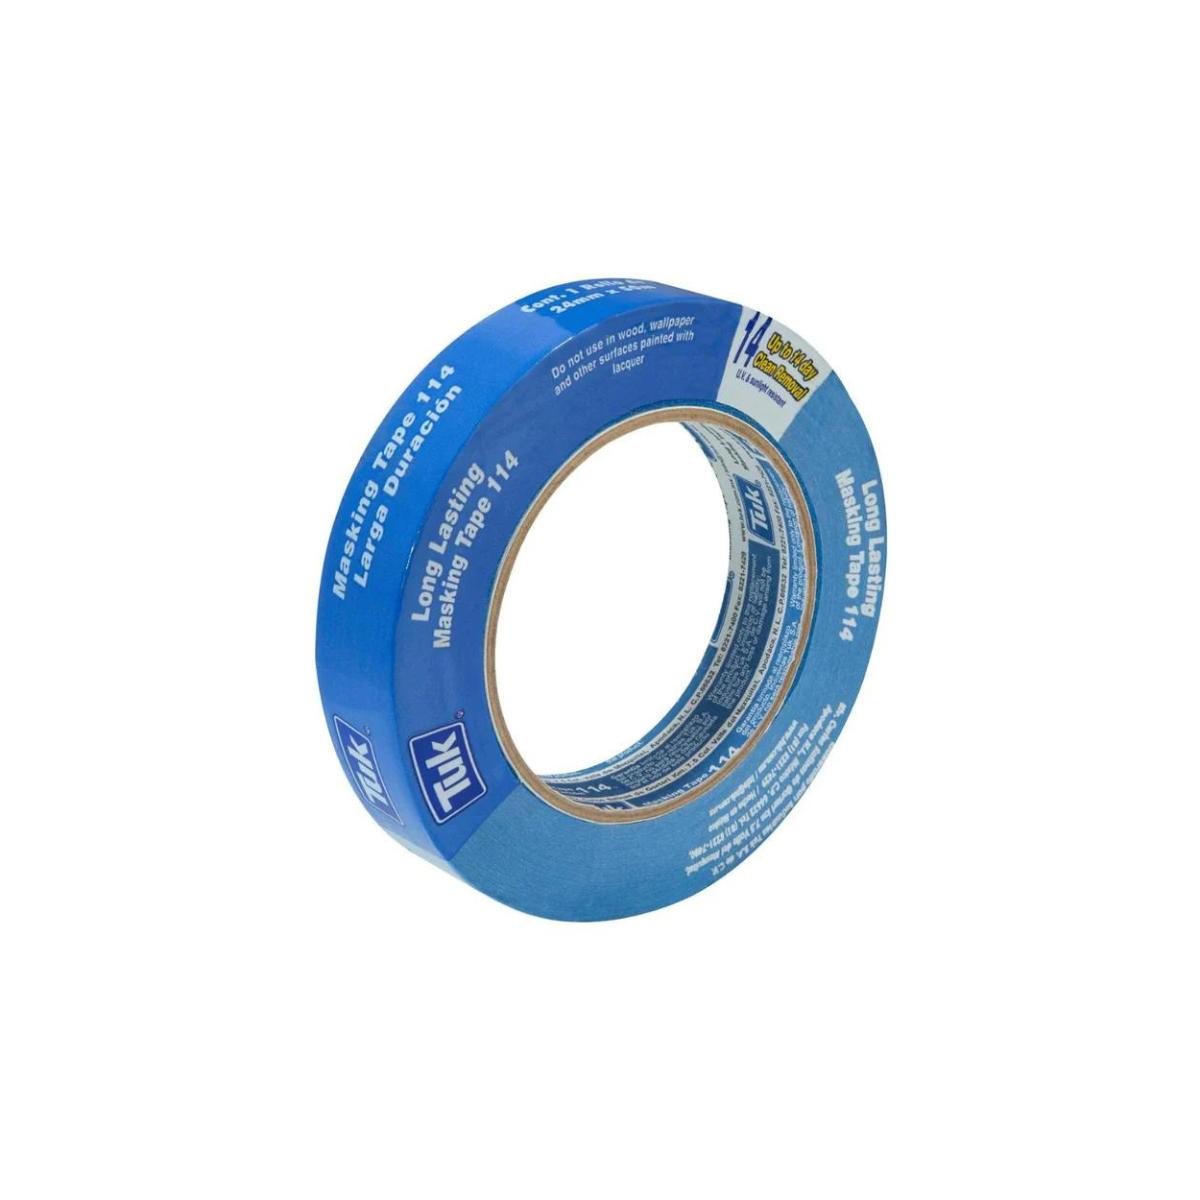 Masking tape azul 114 de 48 mm x 50 m 163031, Marca TUK